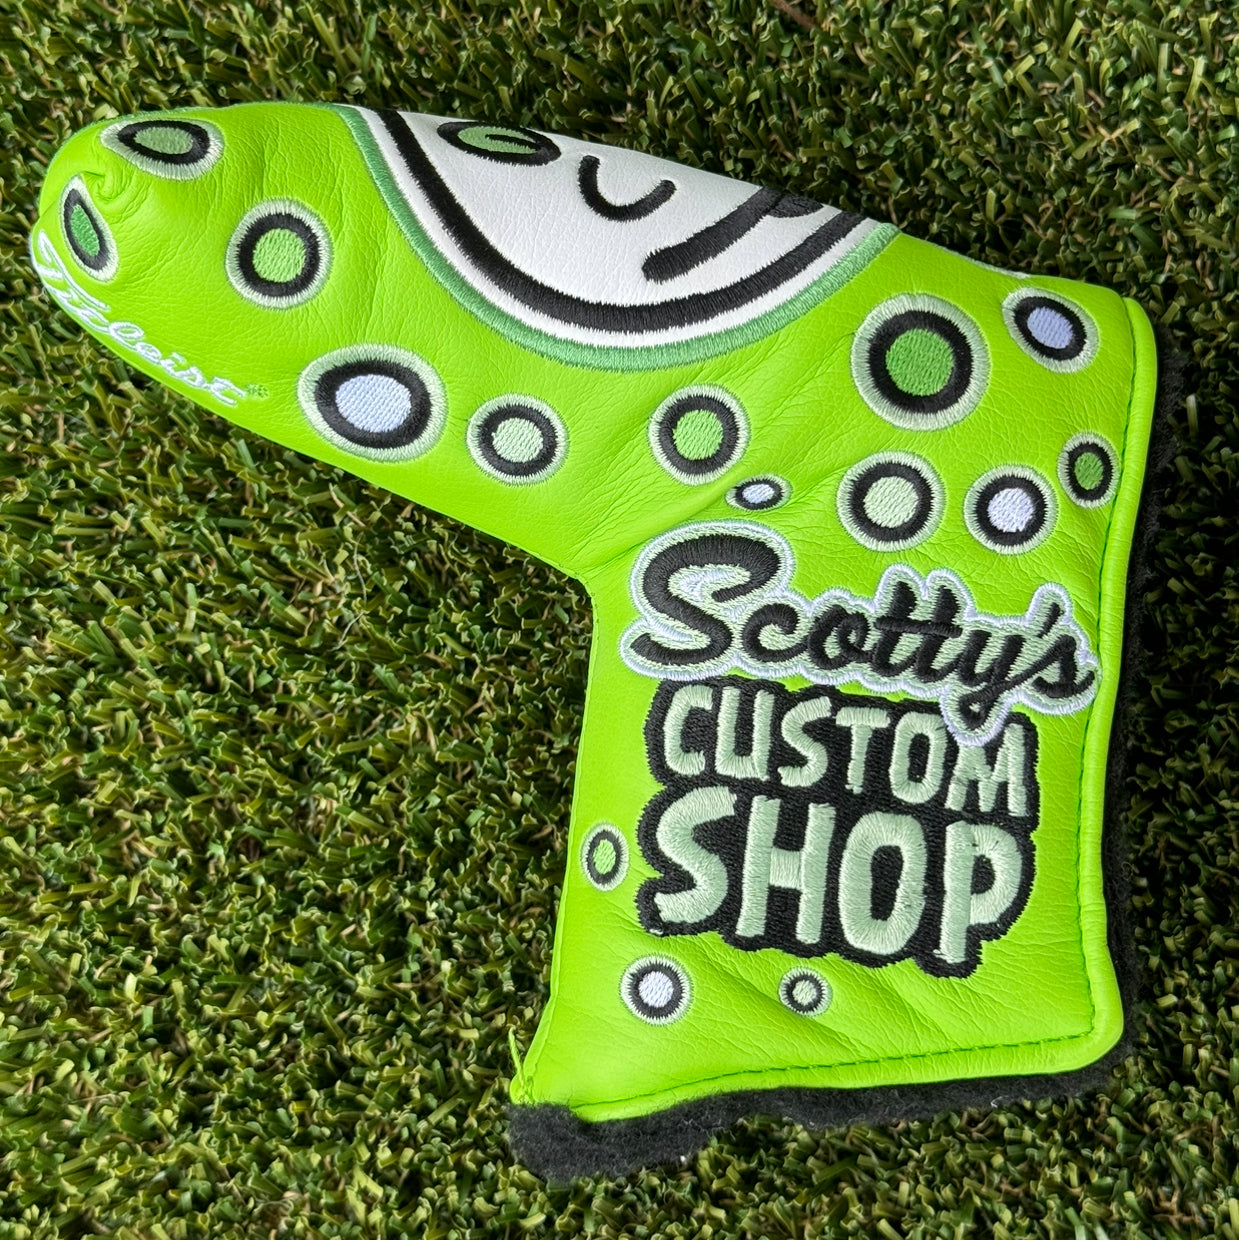 Scotty Cameron Jackpot Johnny Lime Green Custom Shop Blade Headcover